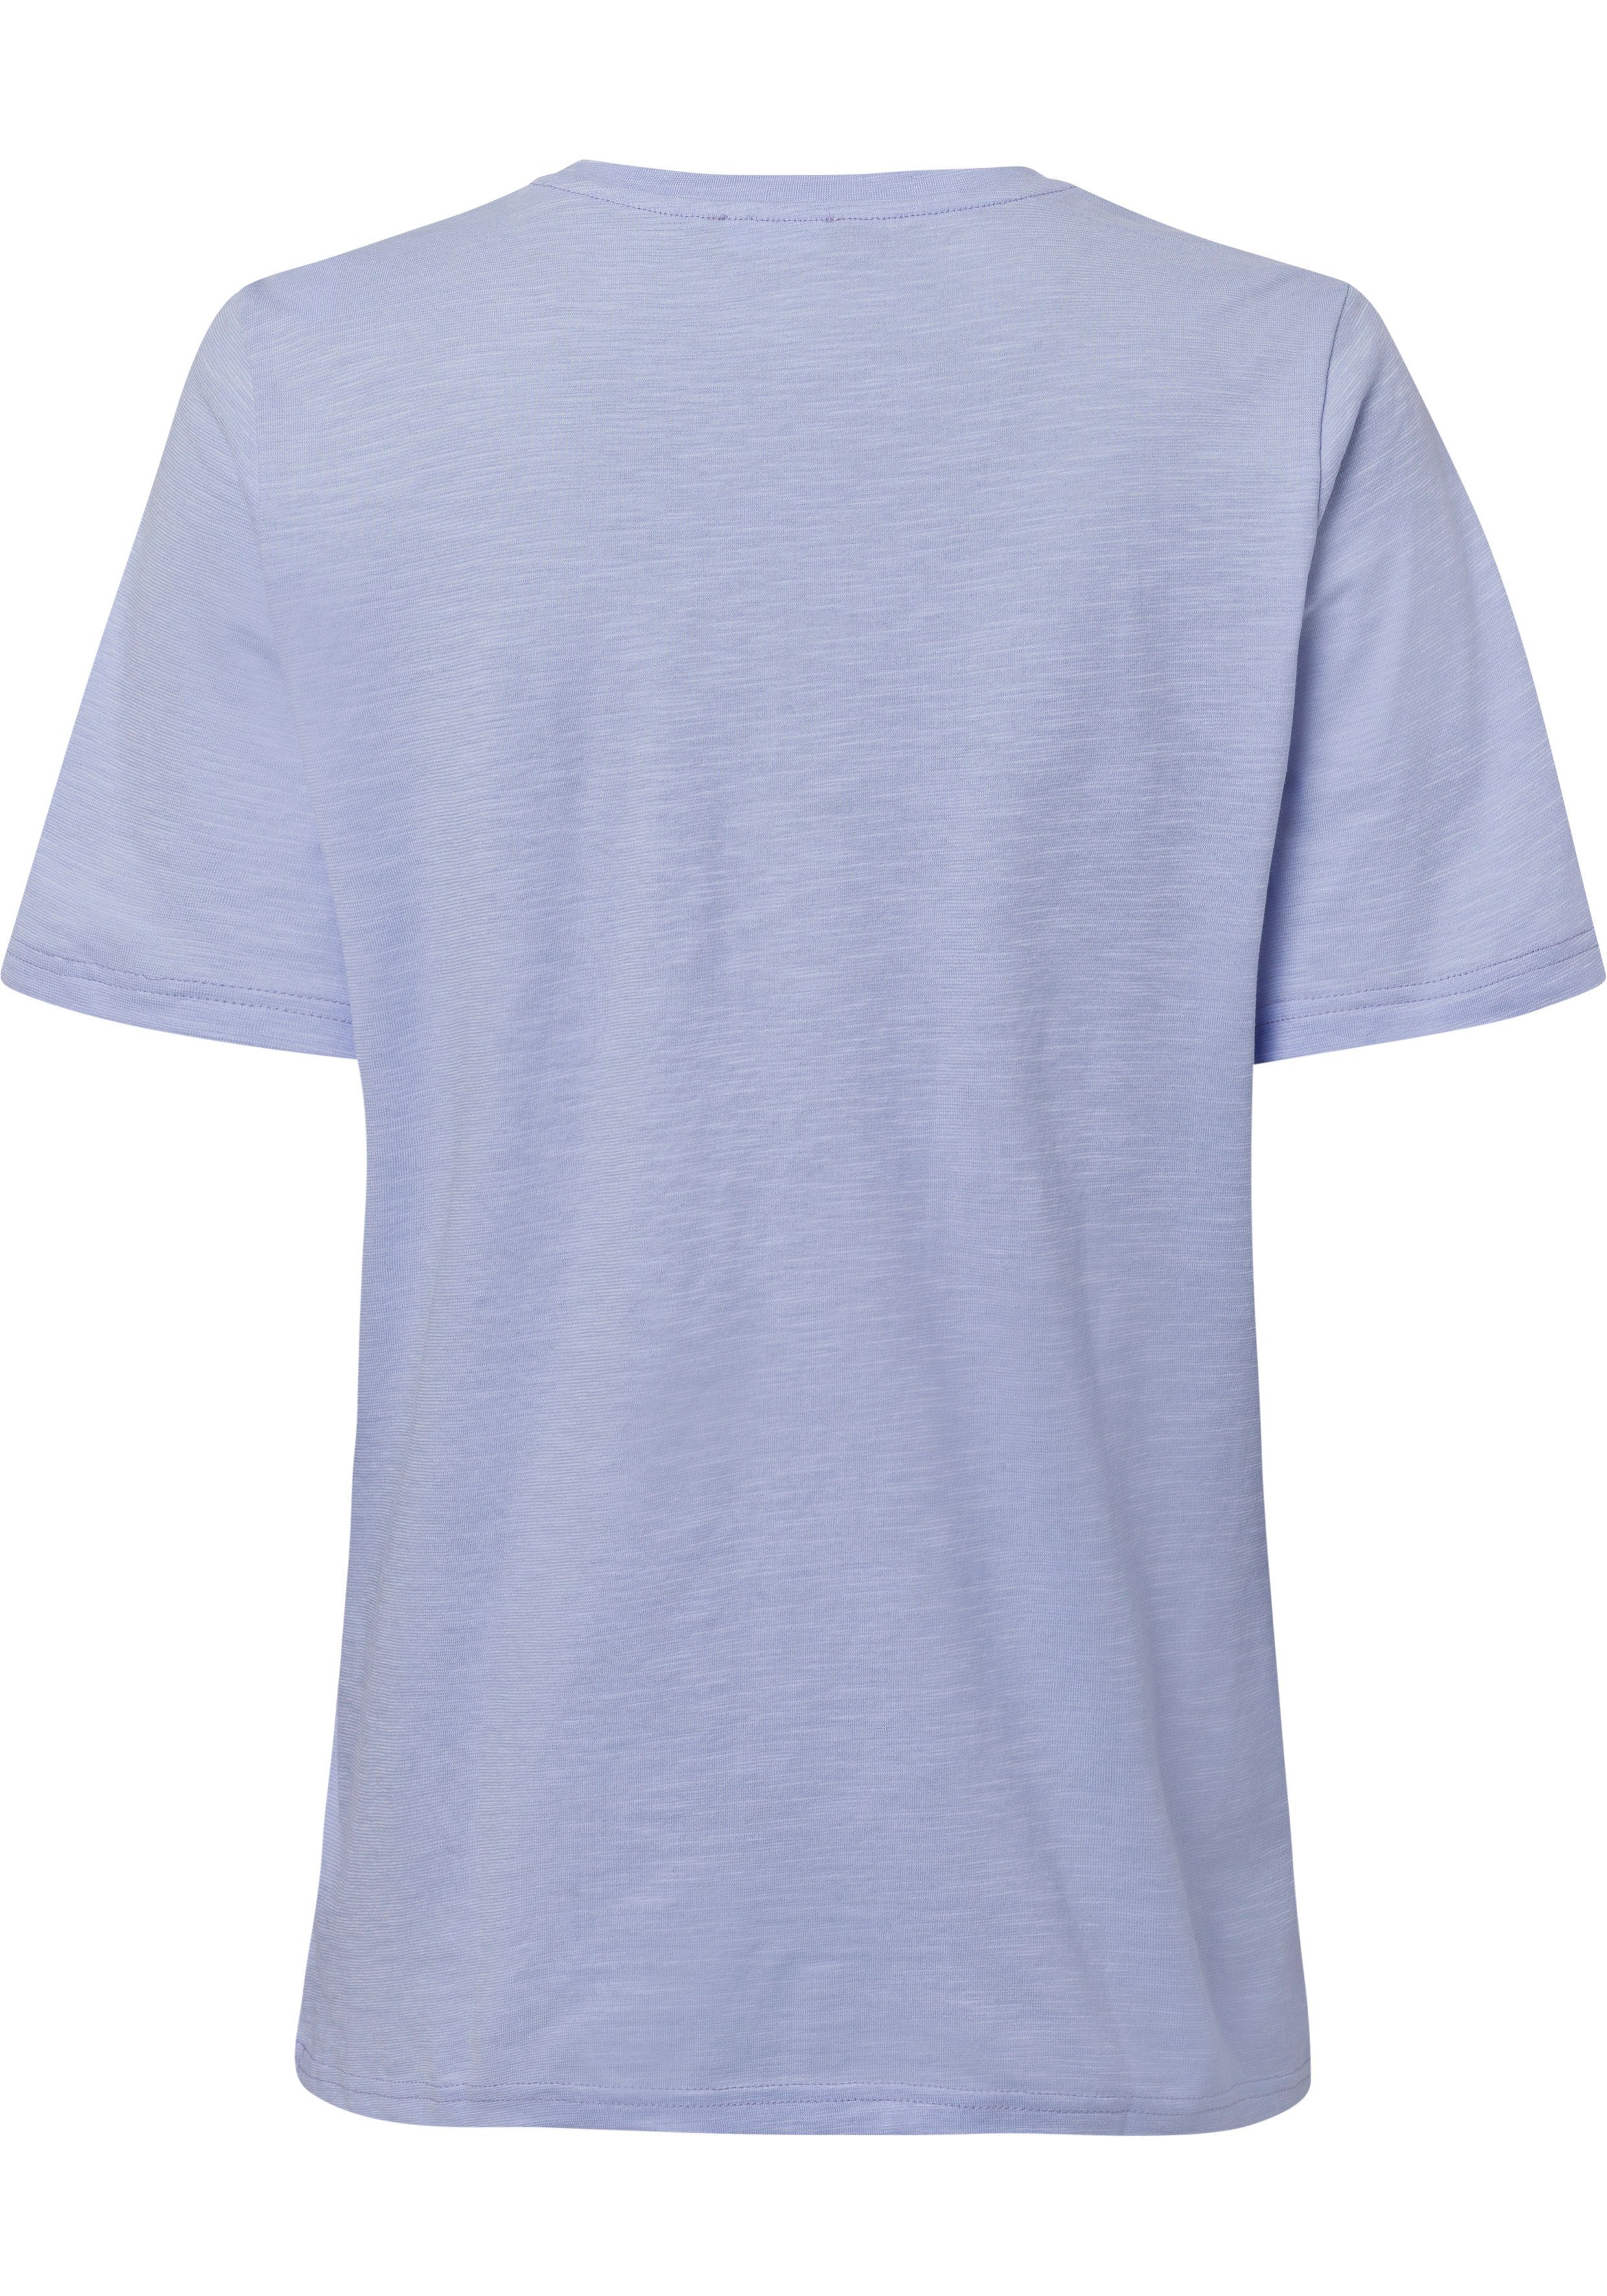 United Colors of Benetton T-Shirt flieder cleaner in Basic-Optik